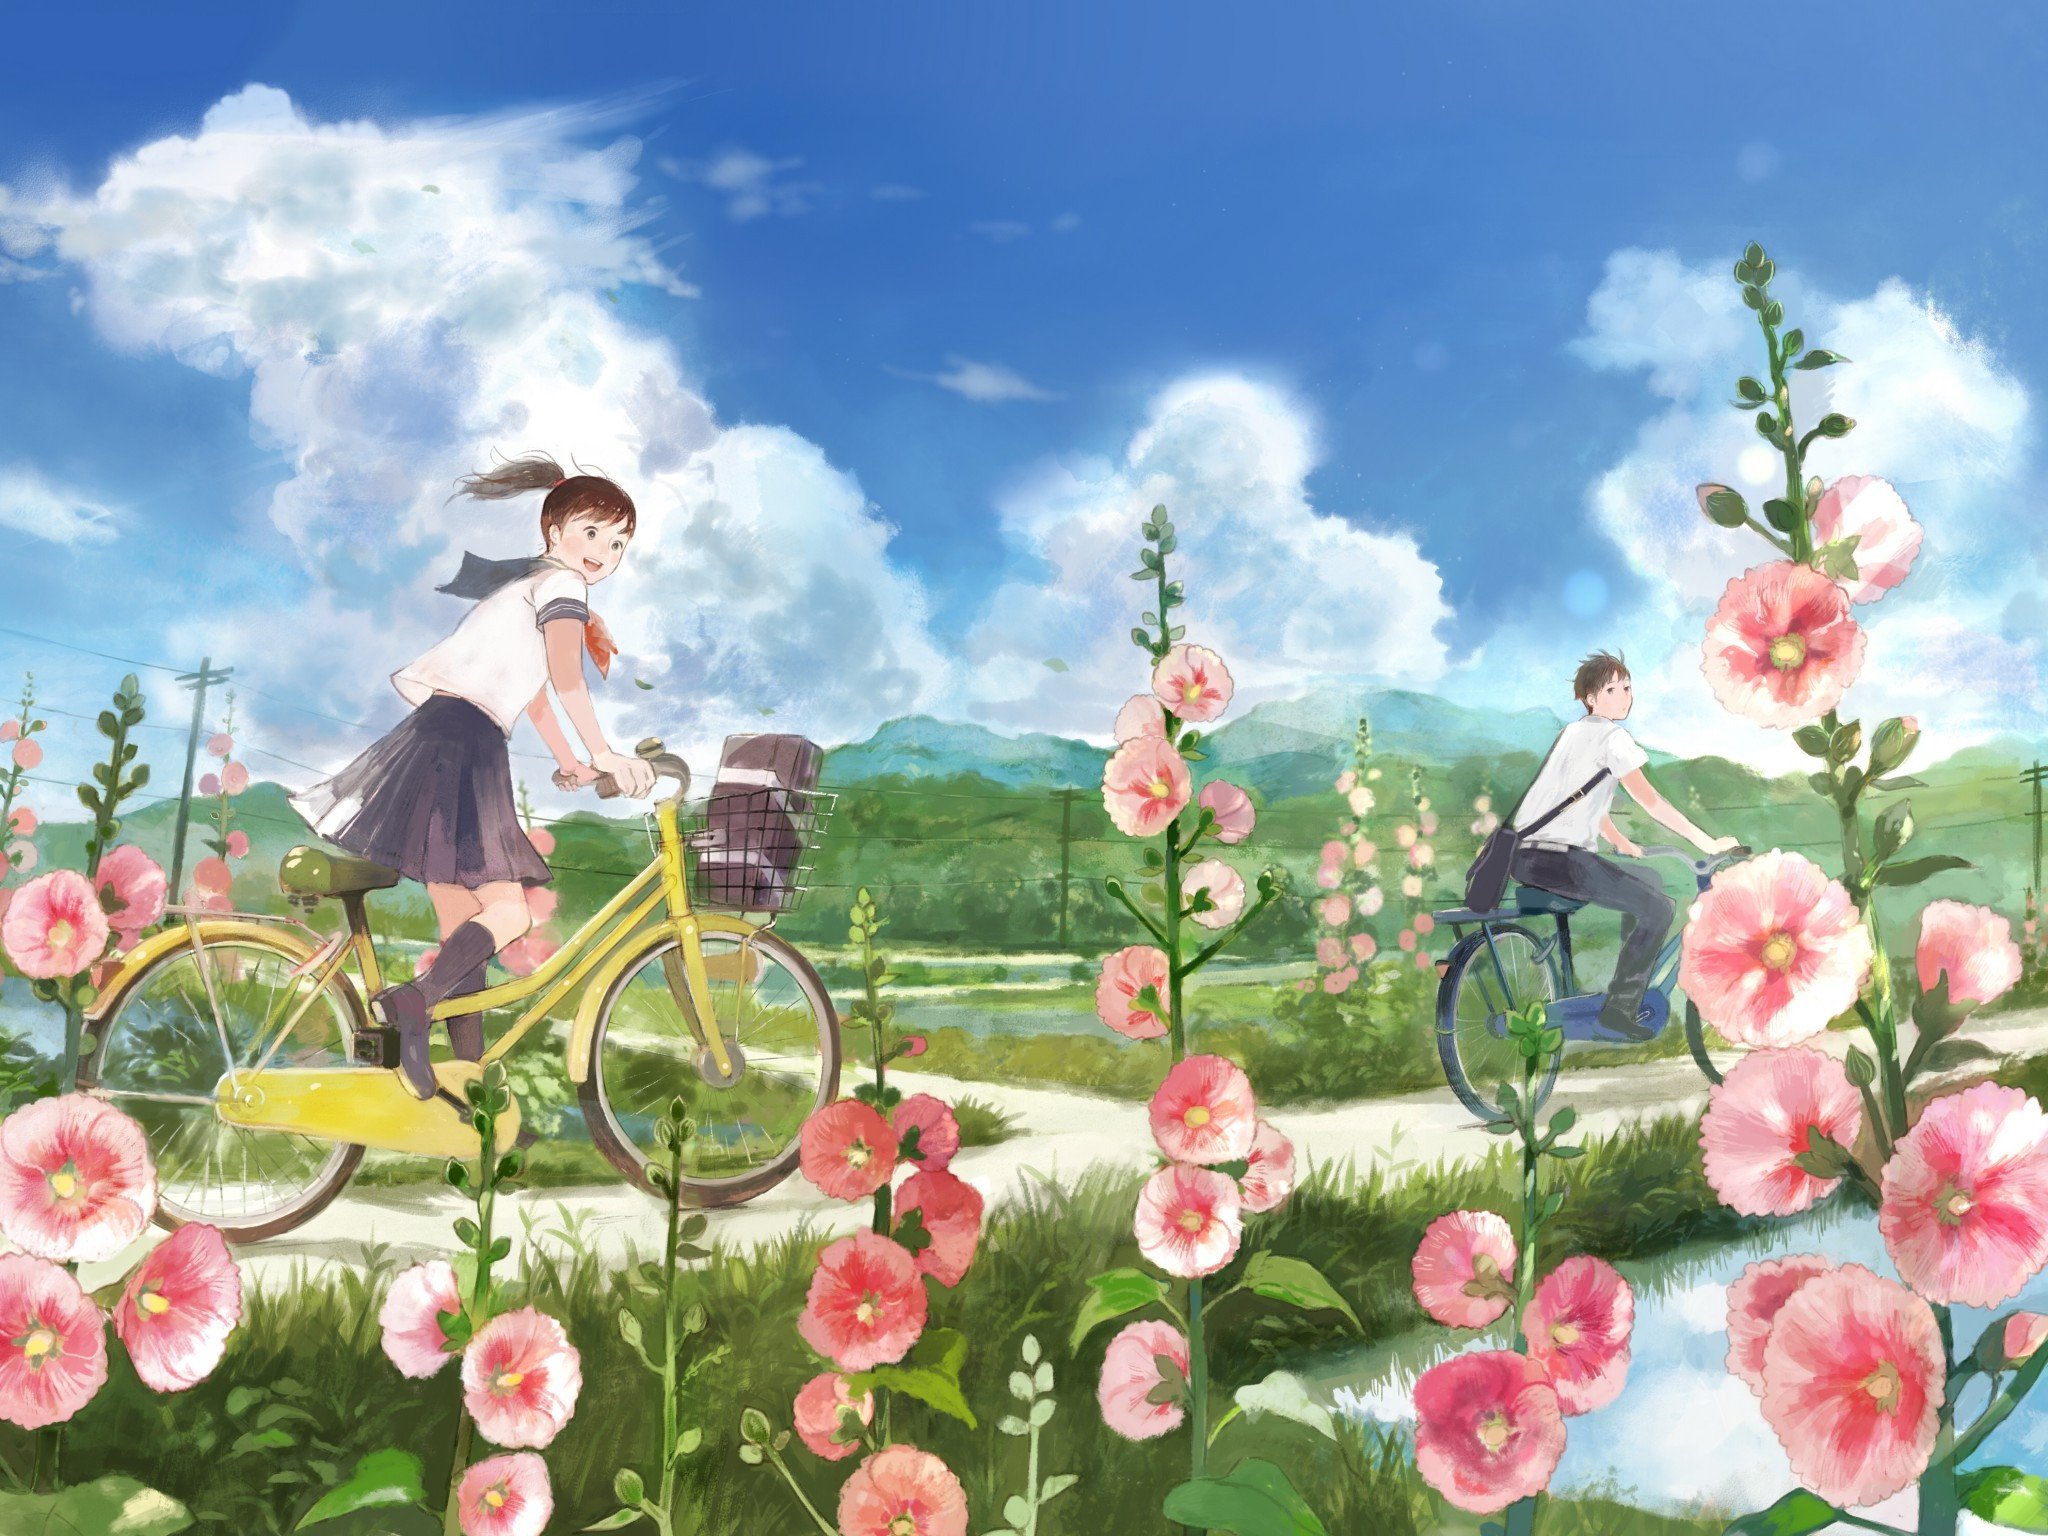 Download 2048x1536 Anime Couple, Summer, Biking, School Uniform, Flowers, Clouds, Scenic, Landscape Wallpaper for Ainol Novo 9 Spark